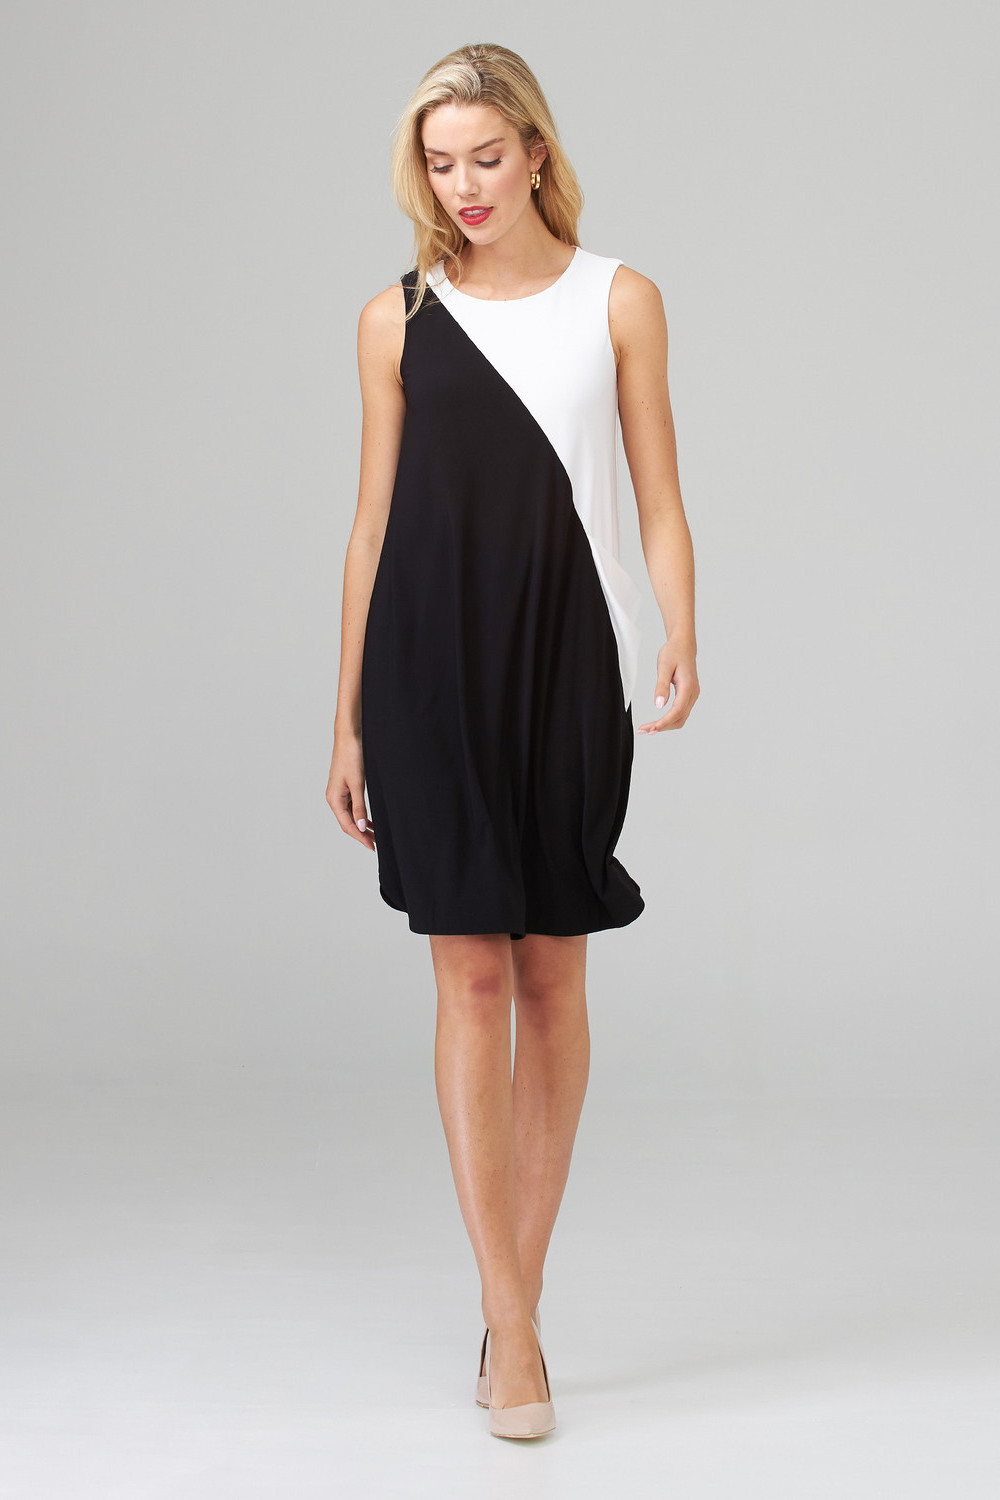 Joseph Ribkoff Dress Style 202305. Black/vanilla